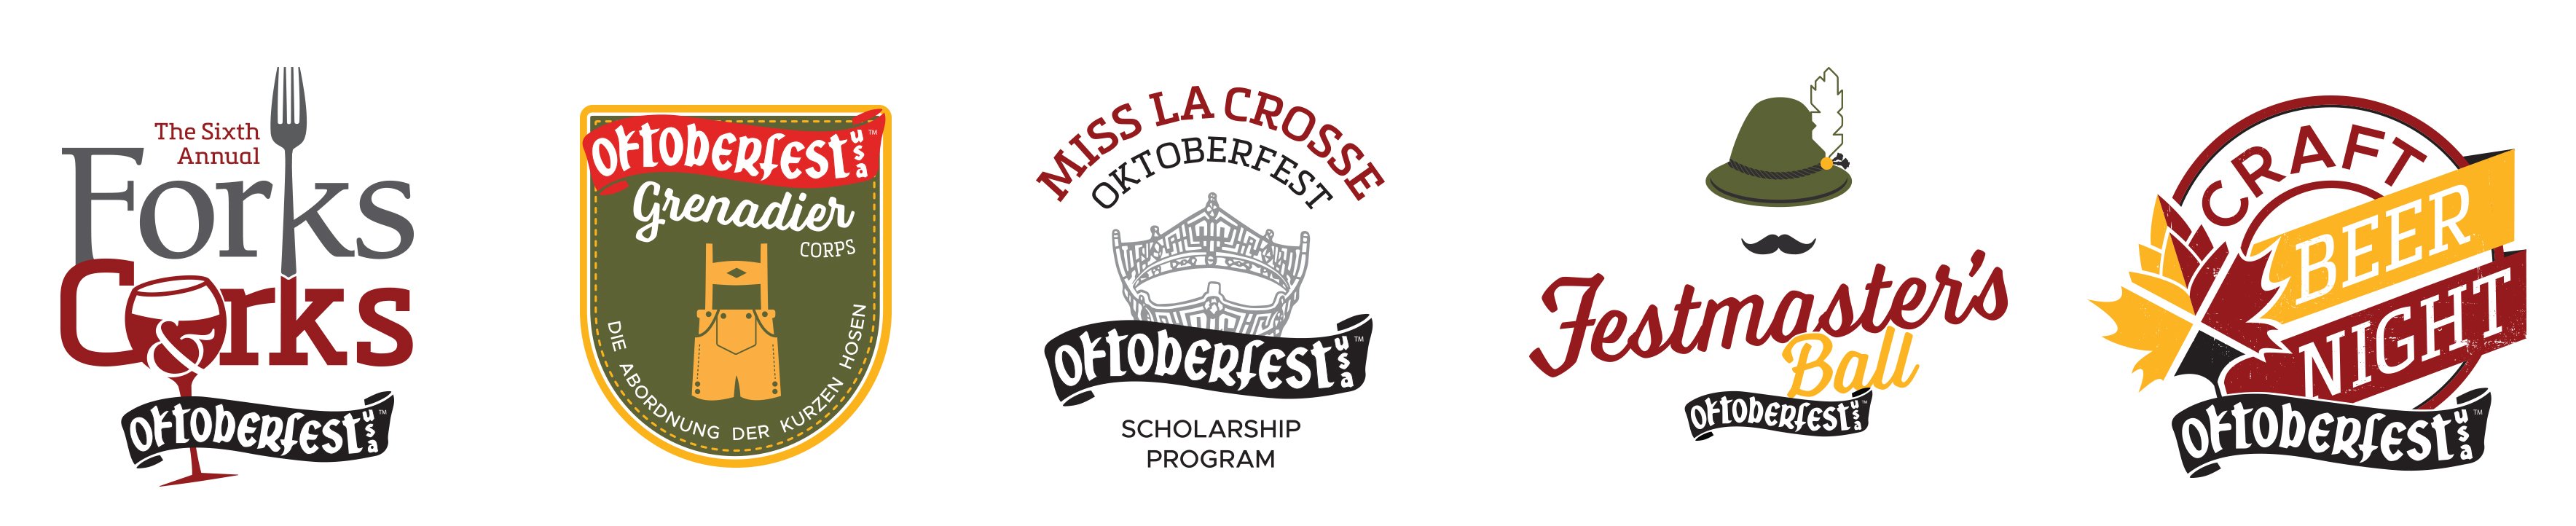 Family of Vendi-created Oktoberfest logos: Forks & Corks, Grenadiers, Miss Oktoberfest, Festmaster’s Ball, Craft Beer Night